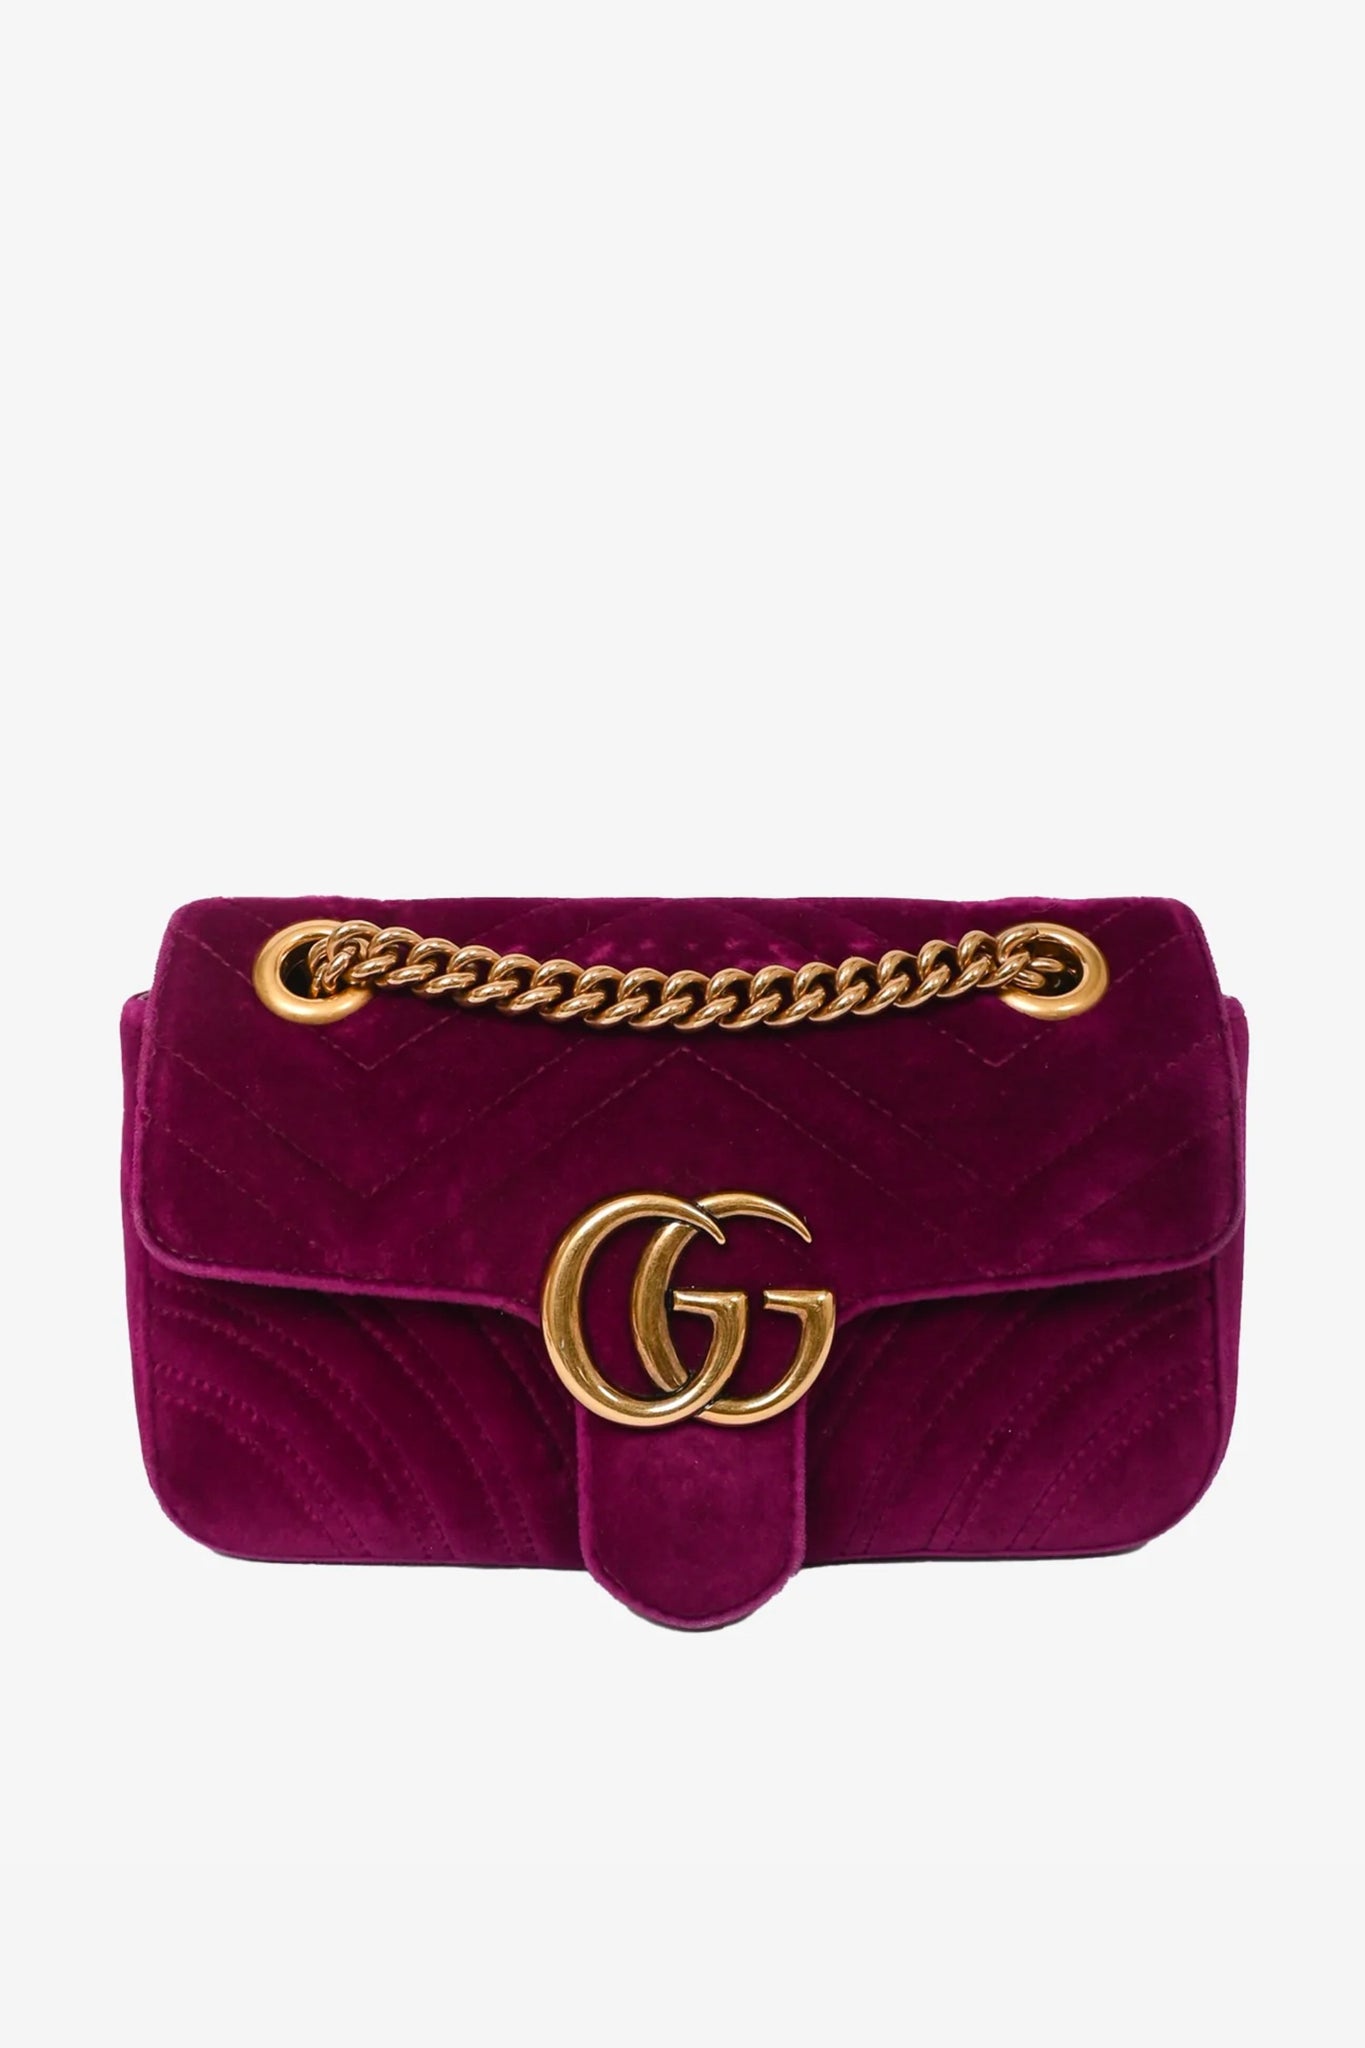 Gucci. Secondhand designer luxury resale.